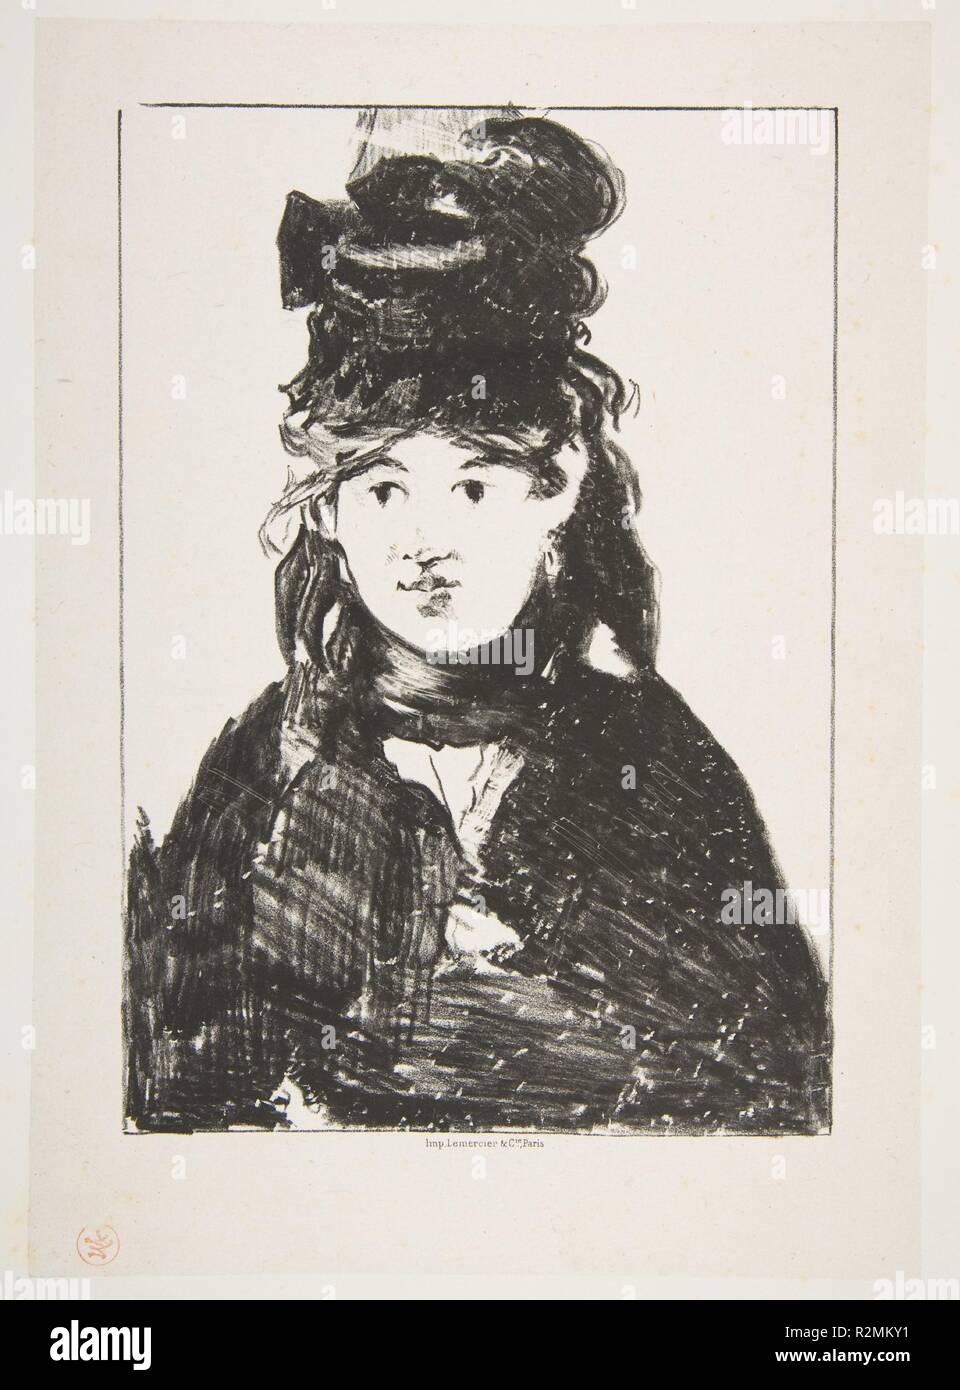 Berthe Morisot (In Black). Artist: Édouard Manet (French, Paris 1832-1883 Paris). Dimensions: Image: 9 13/16 x 6 15/16 in. (24.9 x 17.6 cm)  Sheet: 15 3/4 x 11 7/8in. (40 x 30.2cm). Printer: Lemercier & Cie. (French, Paris). Sitter: Portrait of Berthe Morisot (French, Bourges 1841-1895 Paris). Date: 1872-74. Museum: Metropolitan Museum of Art, New York, USA. Stock Photo